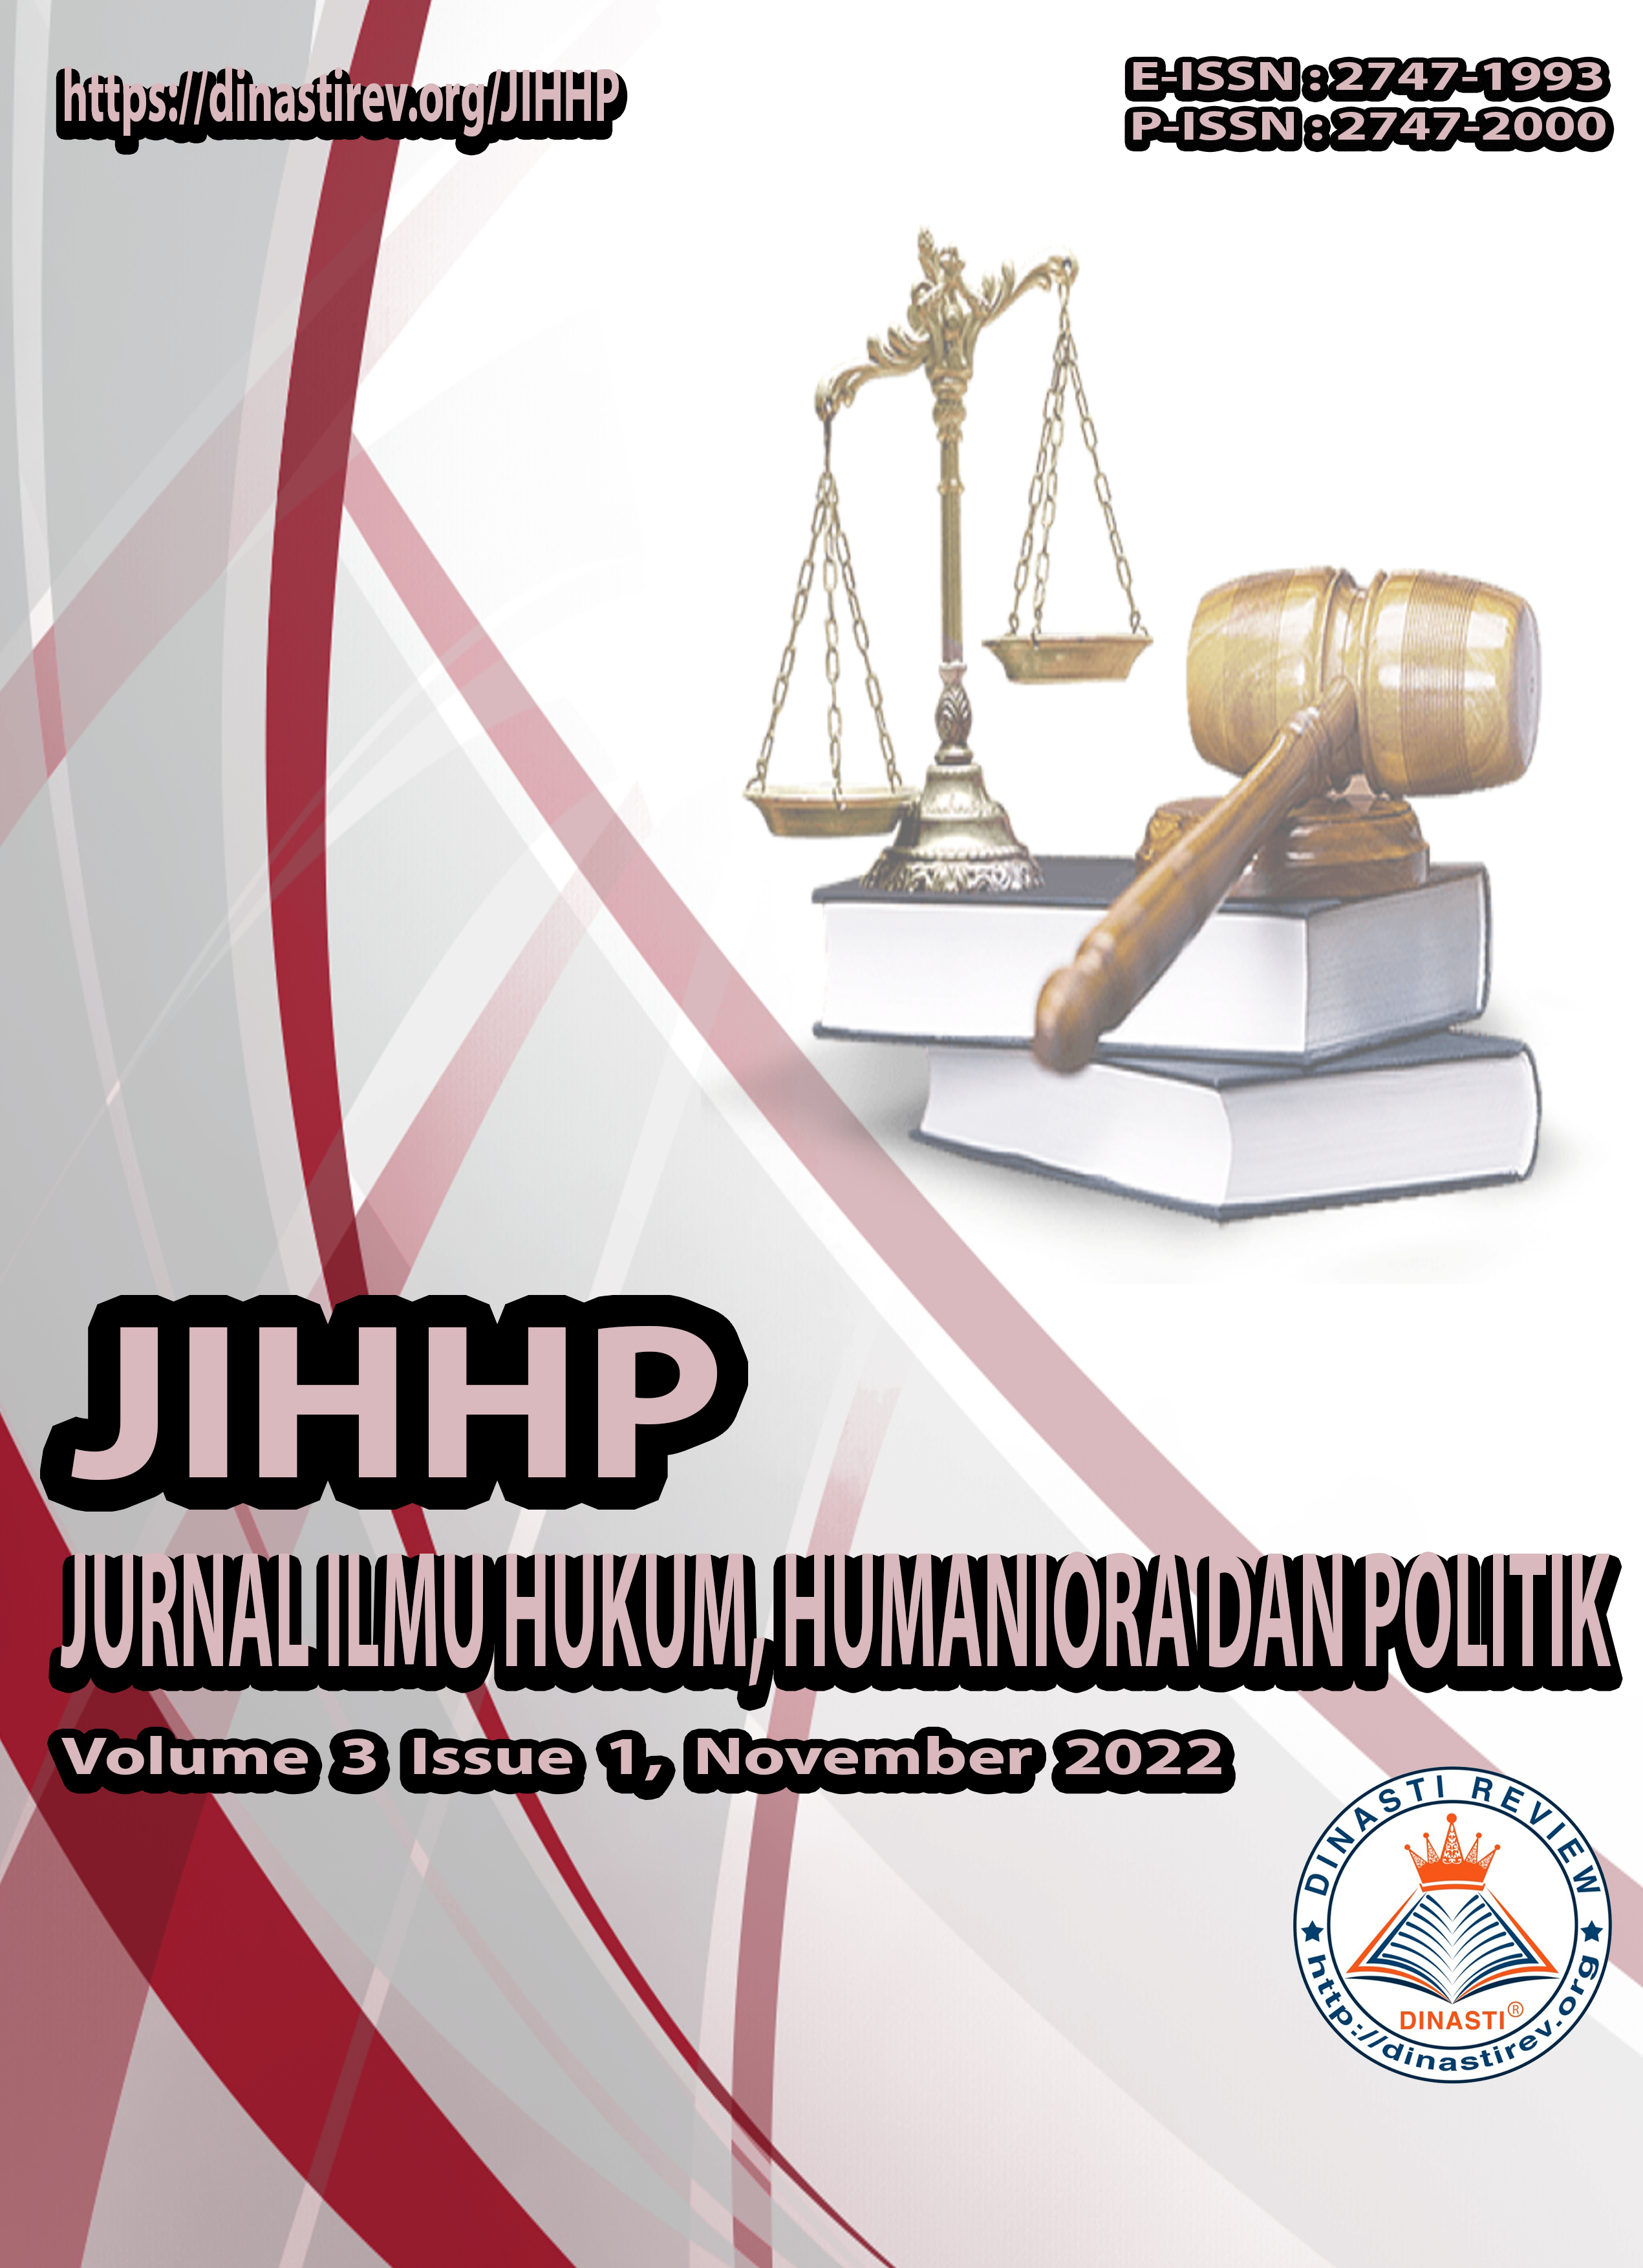 					View Vol. 3 No. 1 (2022): (JIHHP) Jurnal Ilmu Hukum, Humaniora dan Politik (November 2022)
				